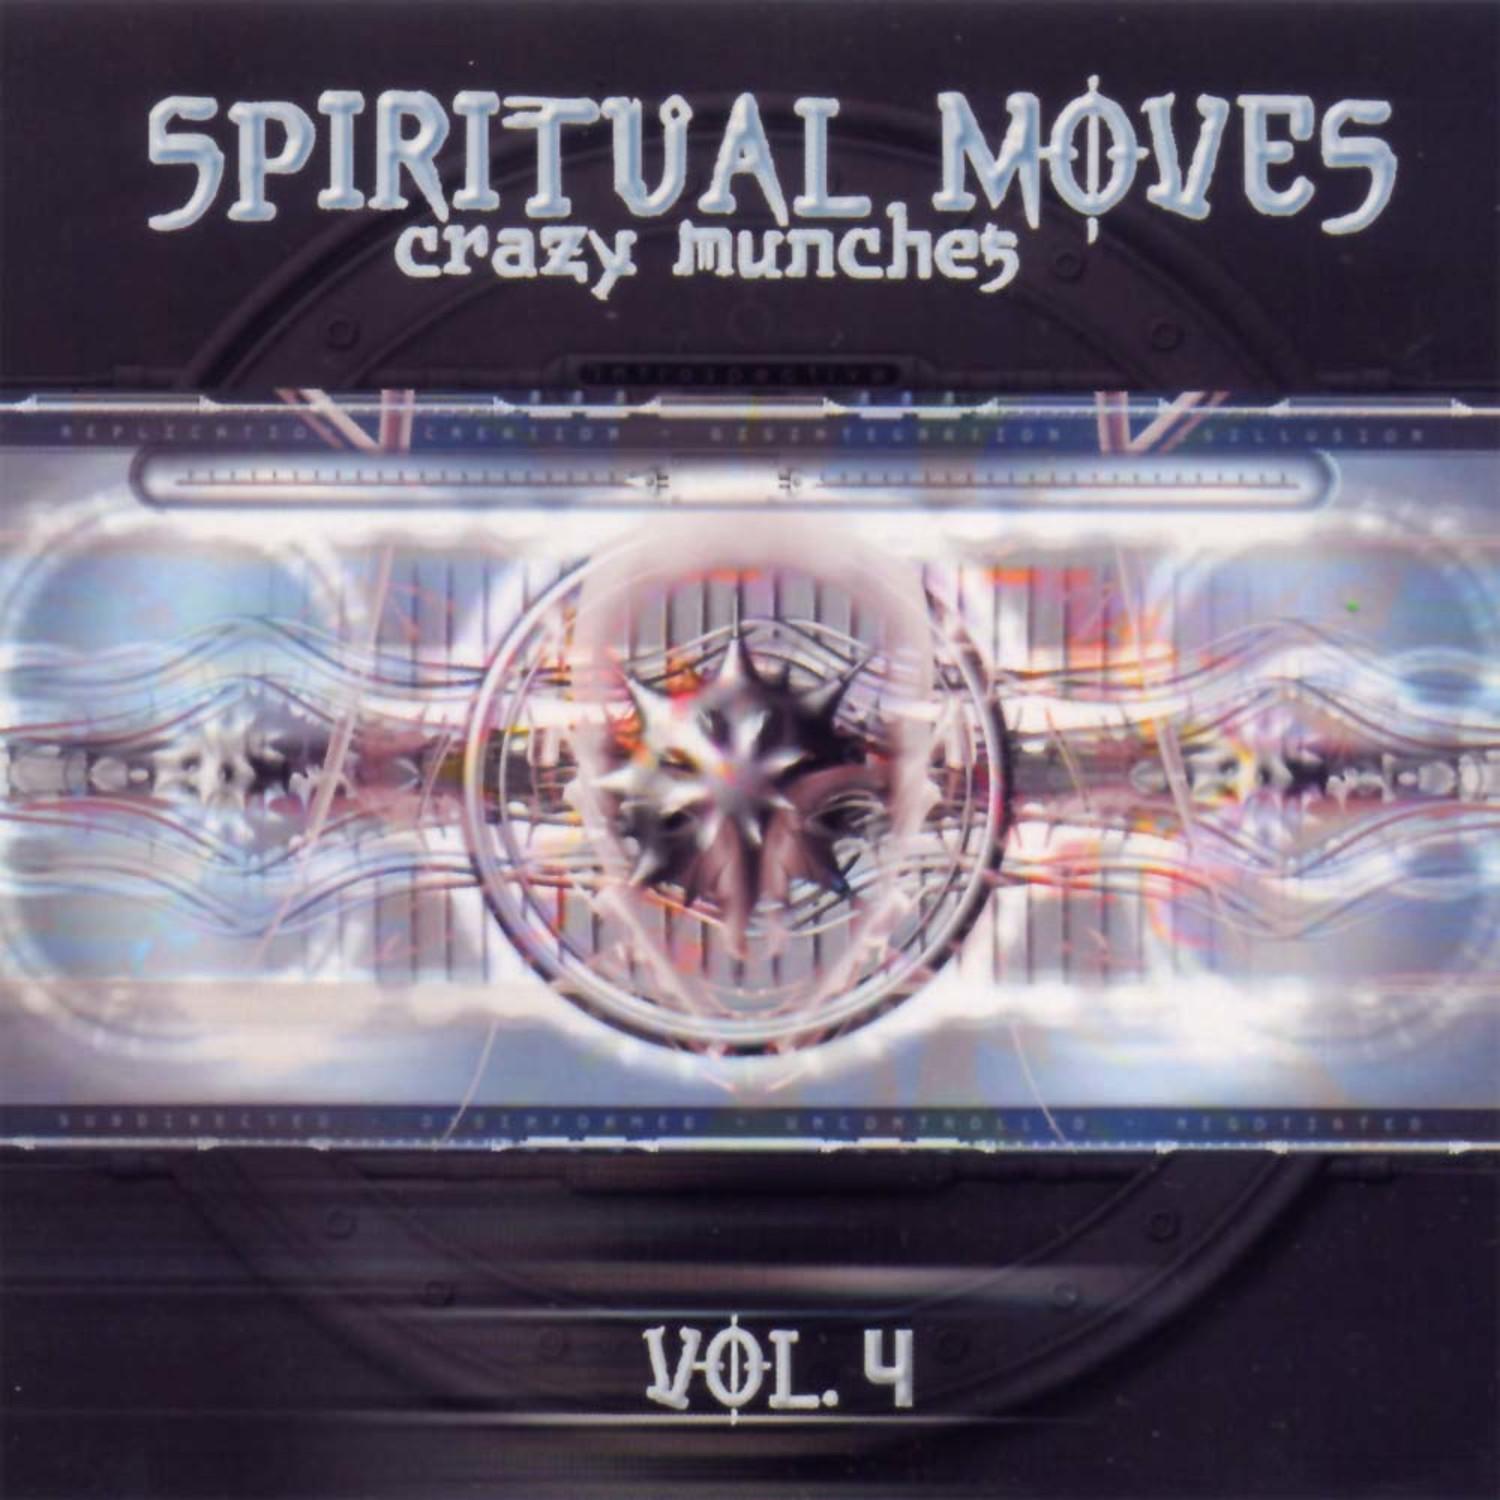 Spiritual Moves Vol. 4 - Crazy Munches